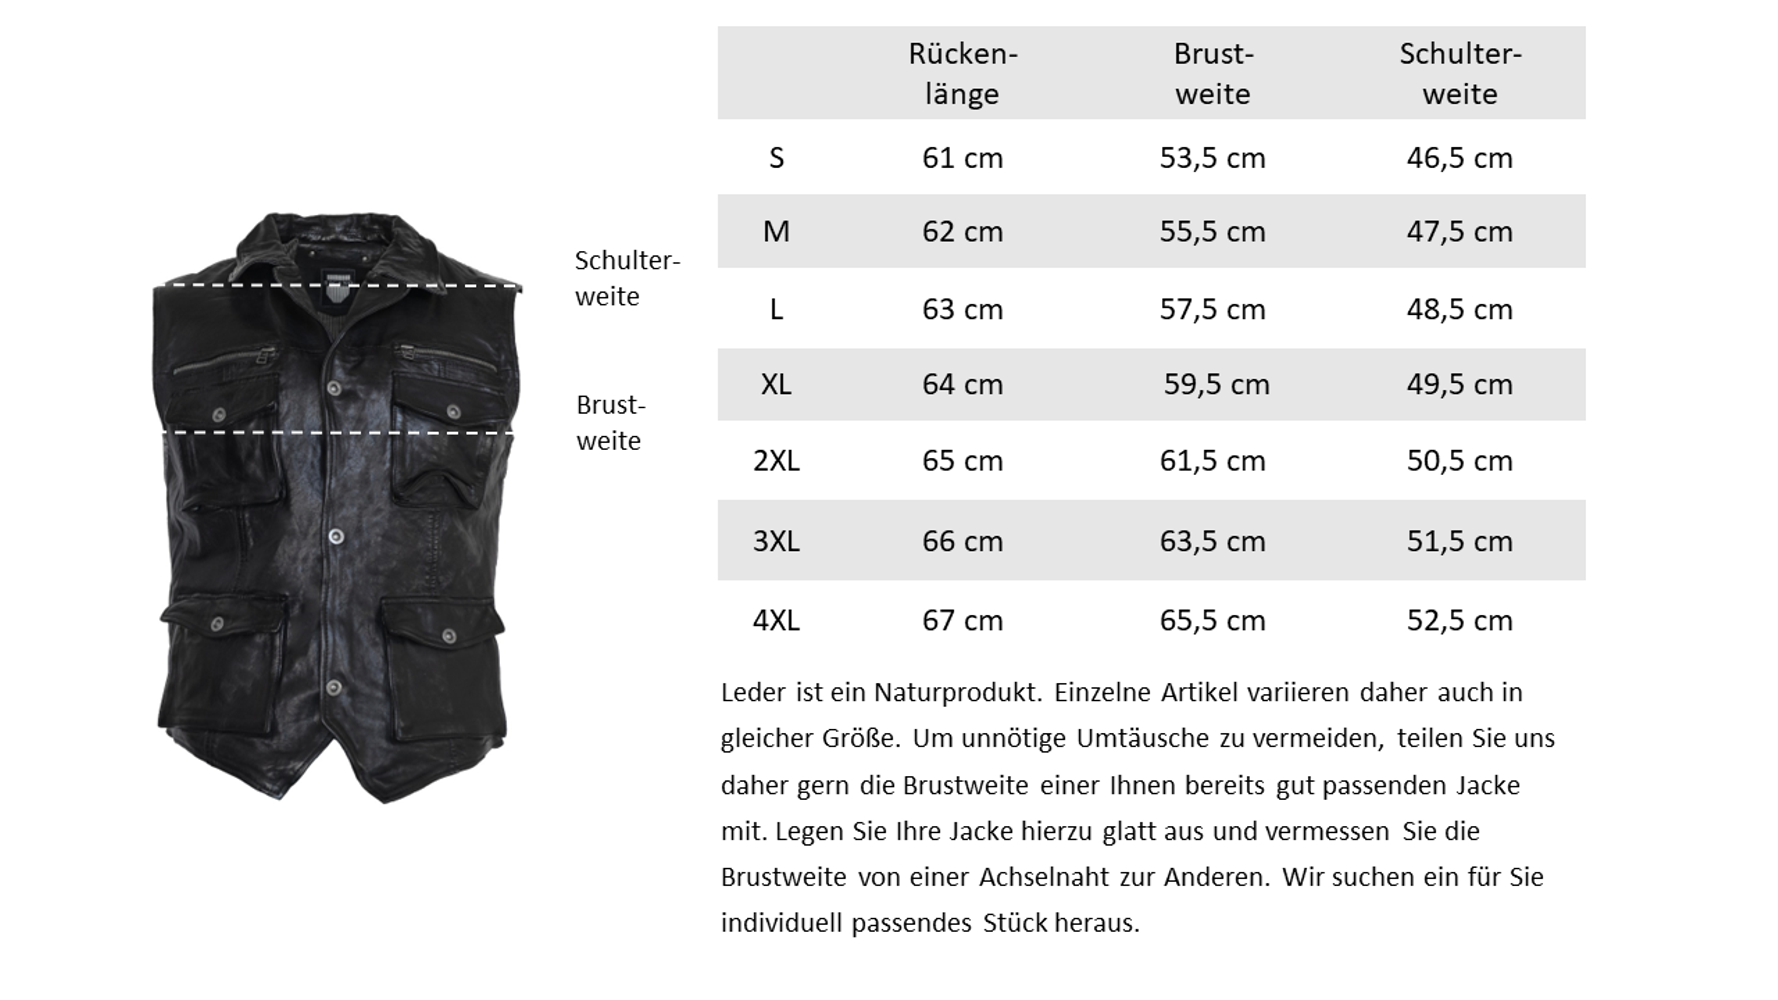 Men's leather vest Vest SK, black in 3 colors, Bild 7